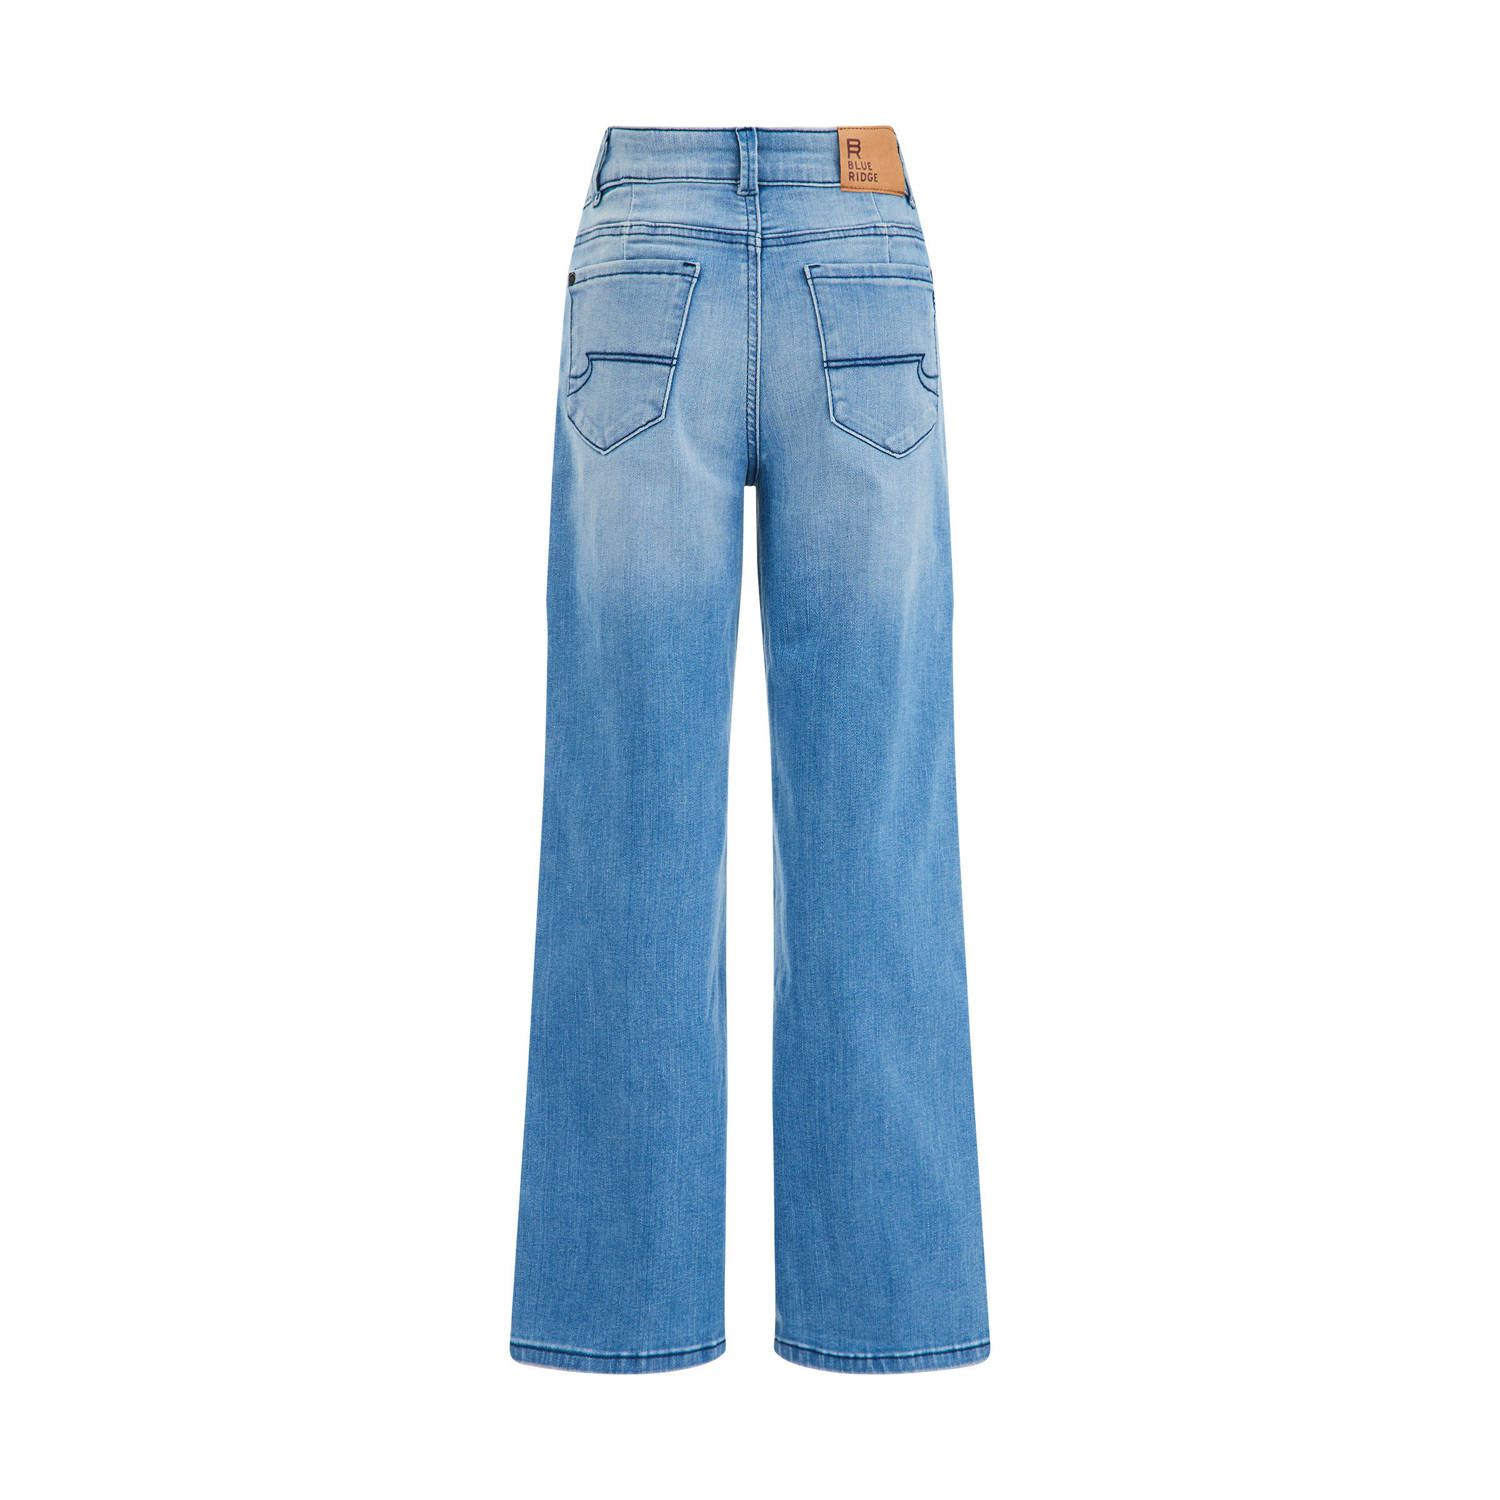 WE Fashion Blue Ridge wide leg jeans fresh blue denim